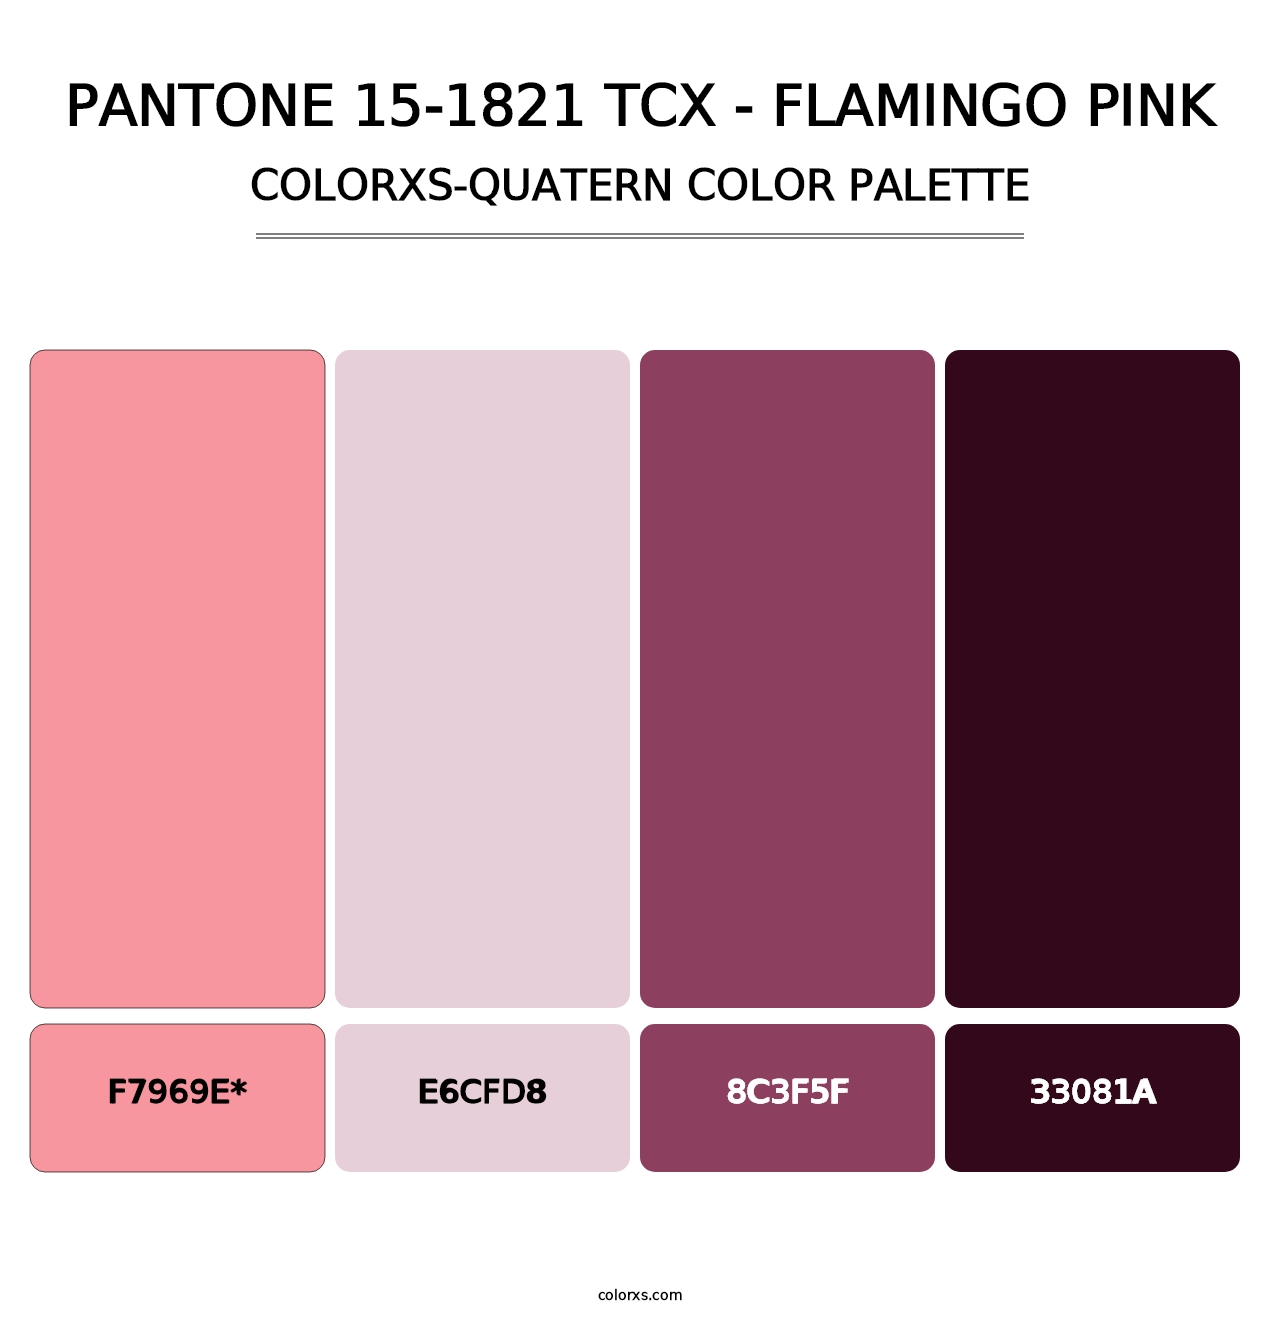 PANTONE 15-1821 TCX - Flamingo Pink - Colorxs Quatern Palette